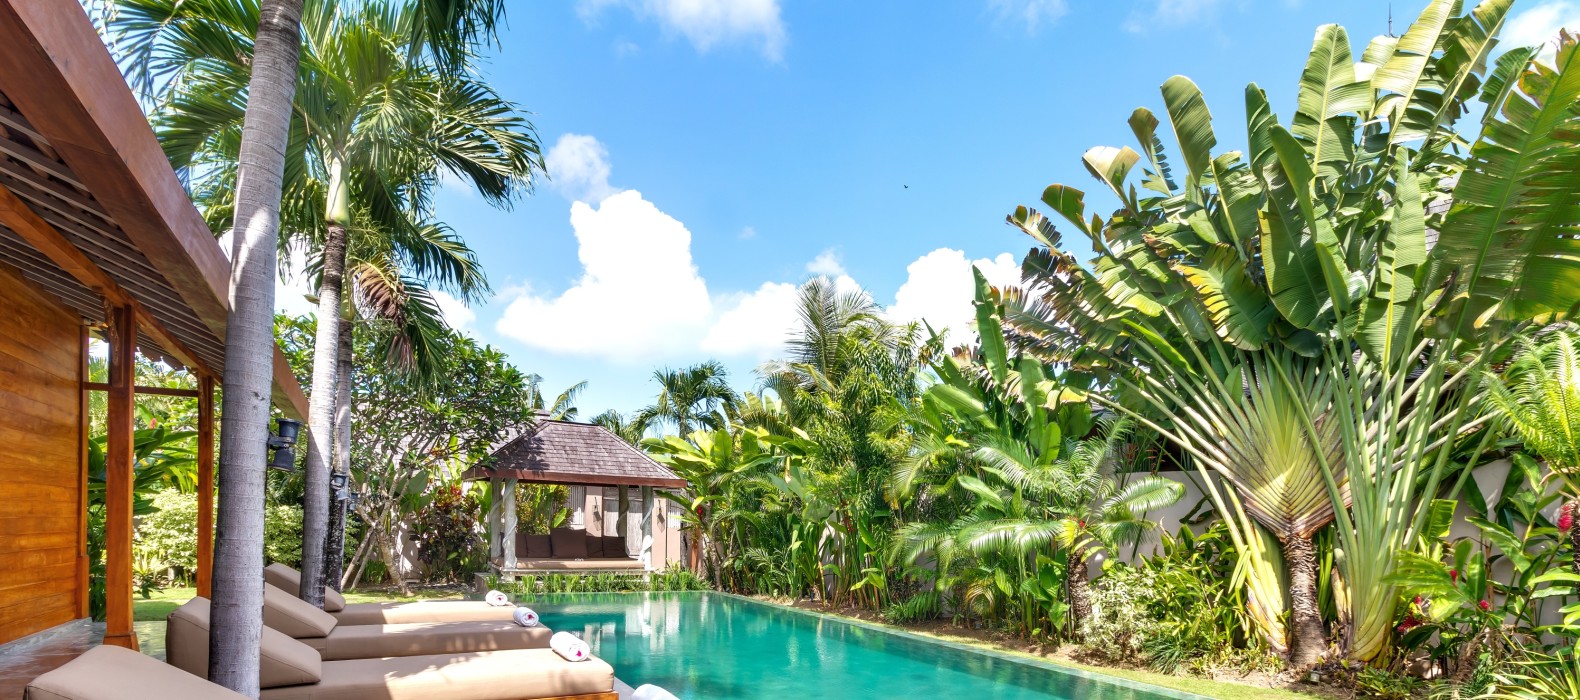 Exterior pool area of Villa Little Mannao in Bali